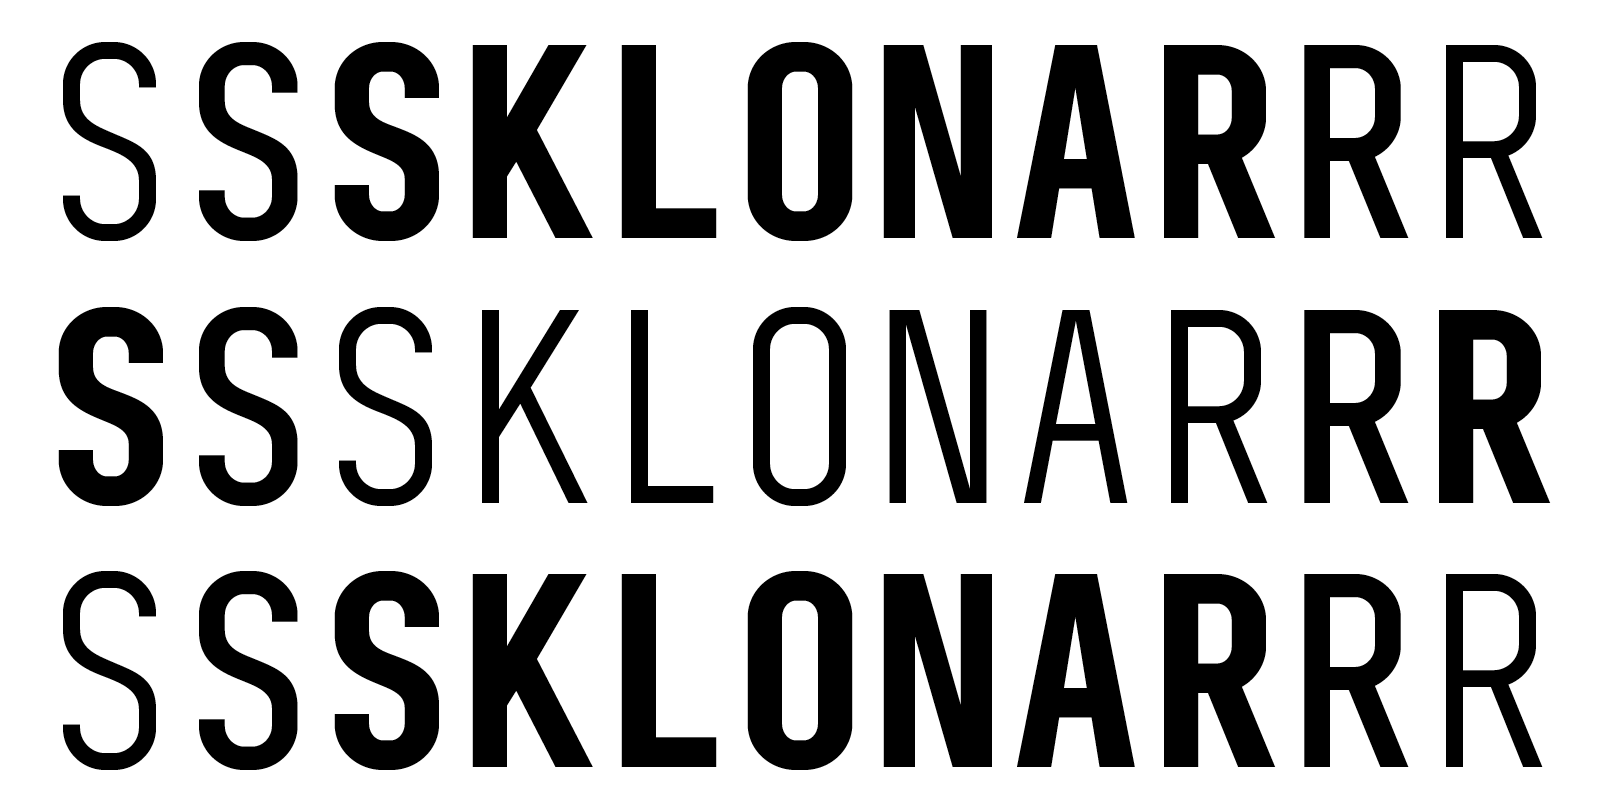 Card displaying BC Sklonar typeface in various styles